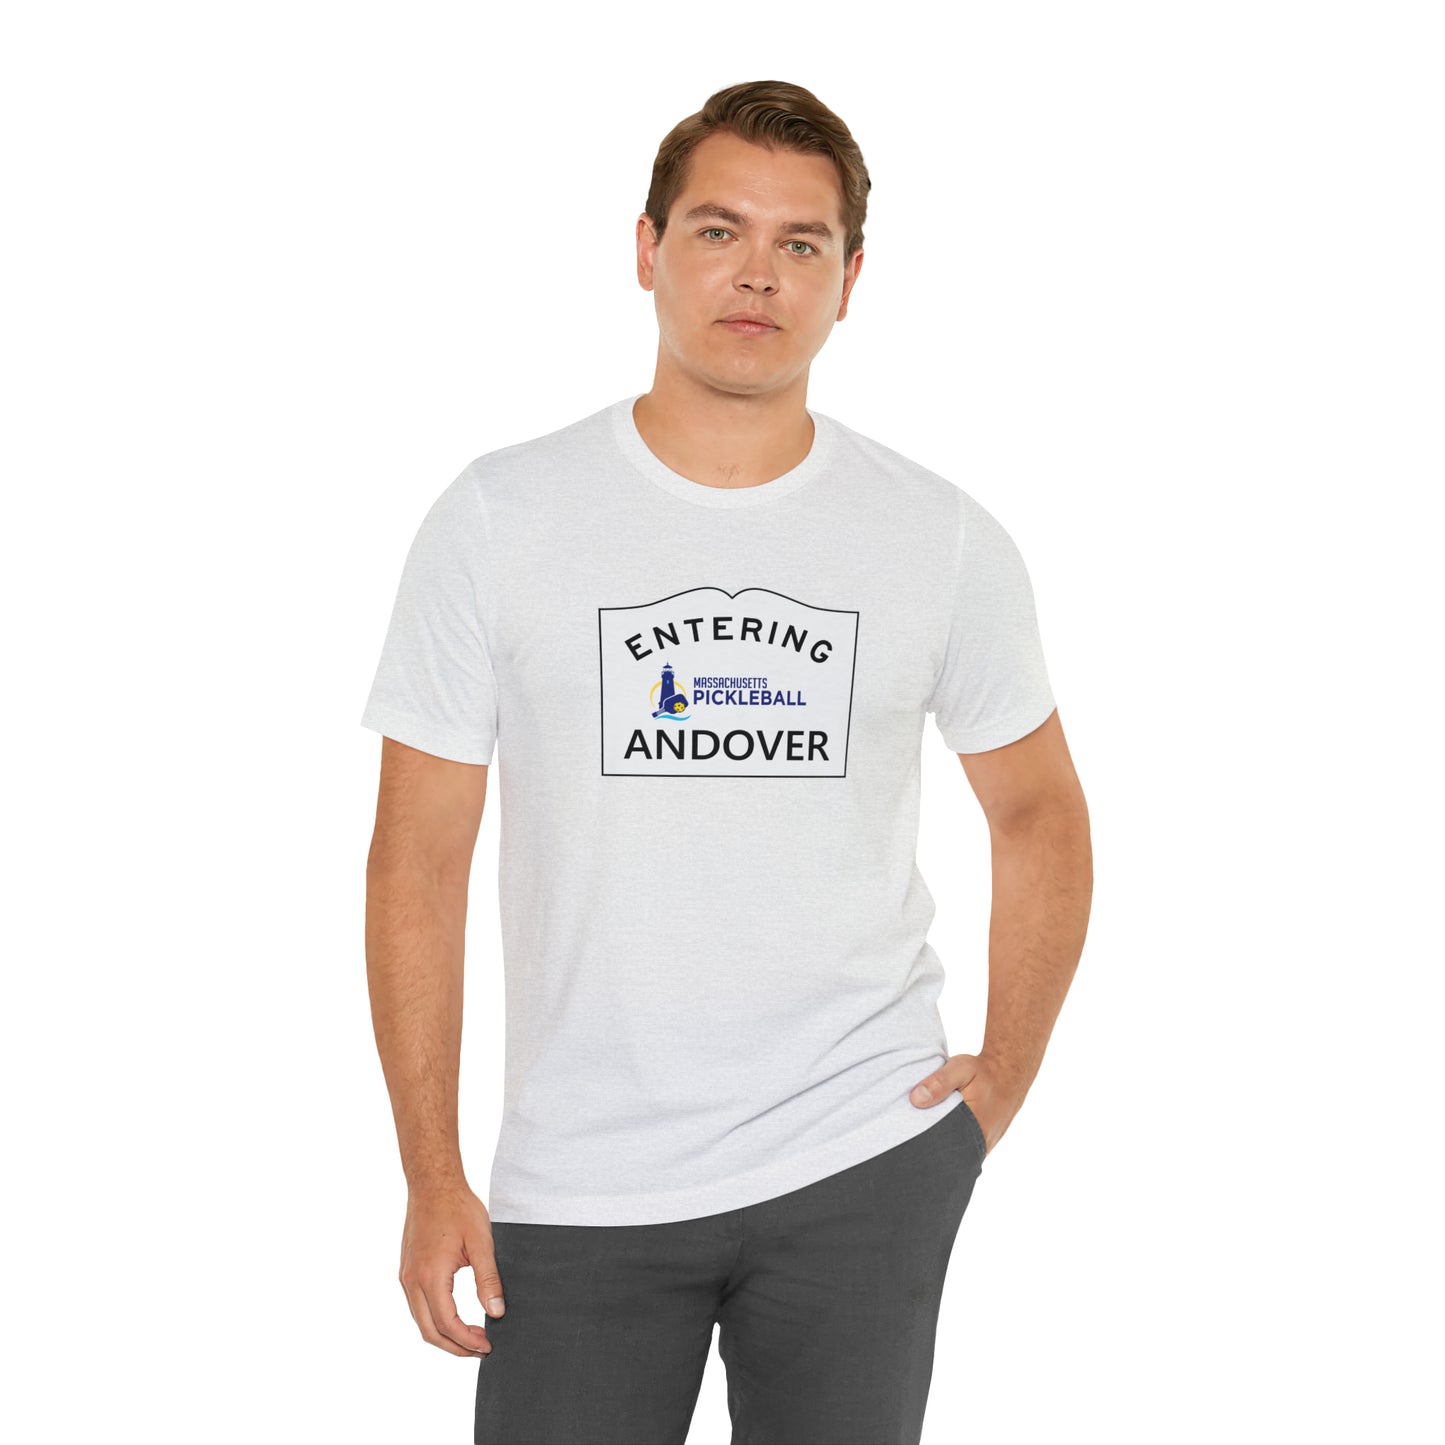 Andover, Mass Pickleball Short Sleeve T-Shirt